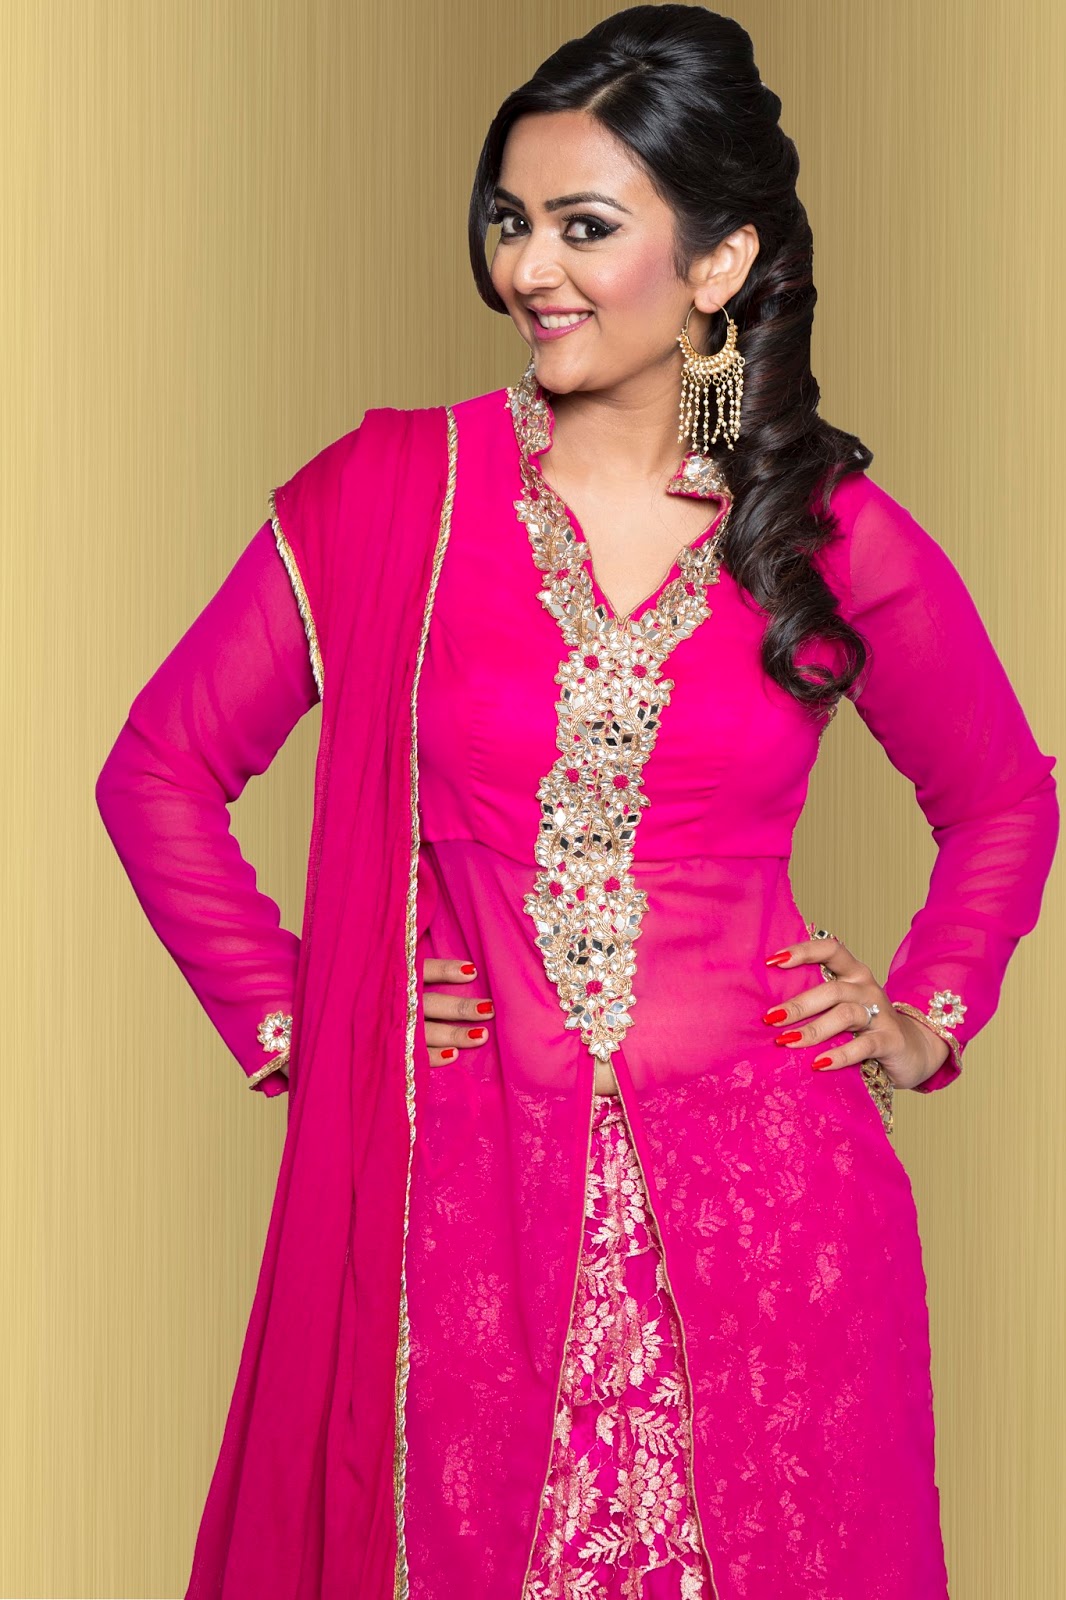 desginer lehenga, hot pink outfit, indian designer wear online, wedding lehengas online, seattle indian outfits store